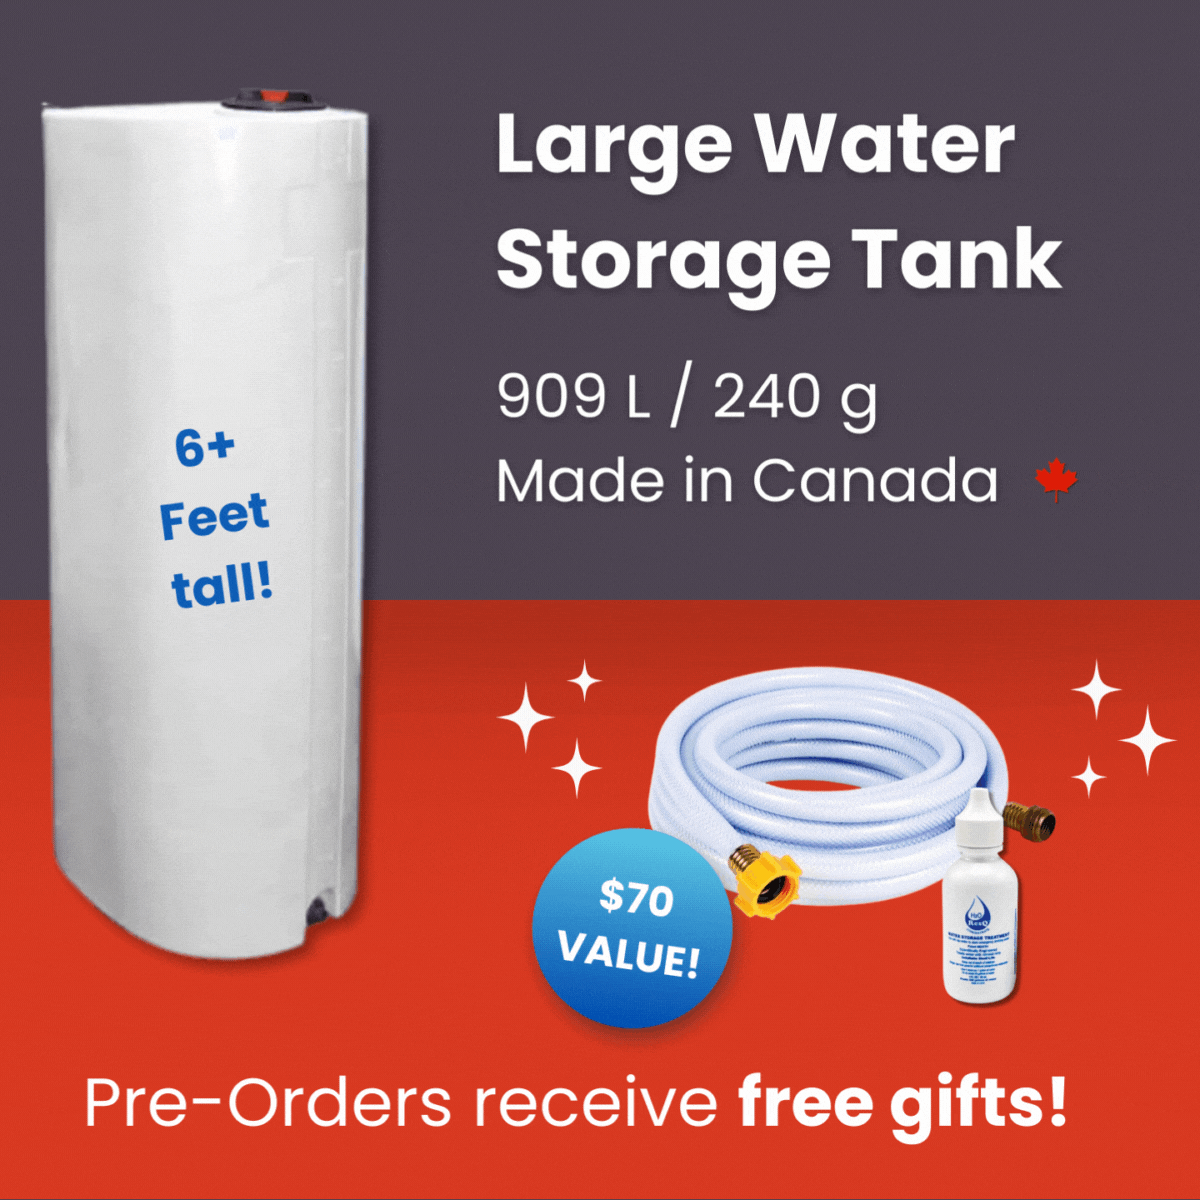 NEW Large Water Storage Tank